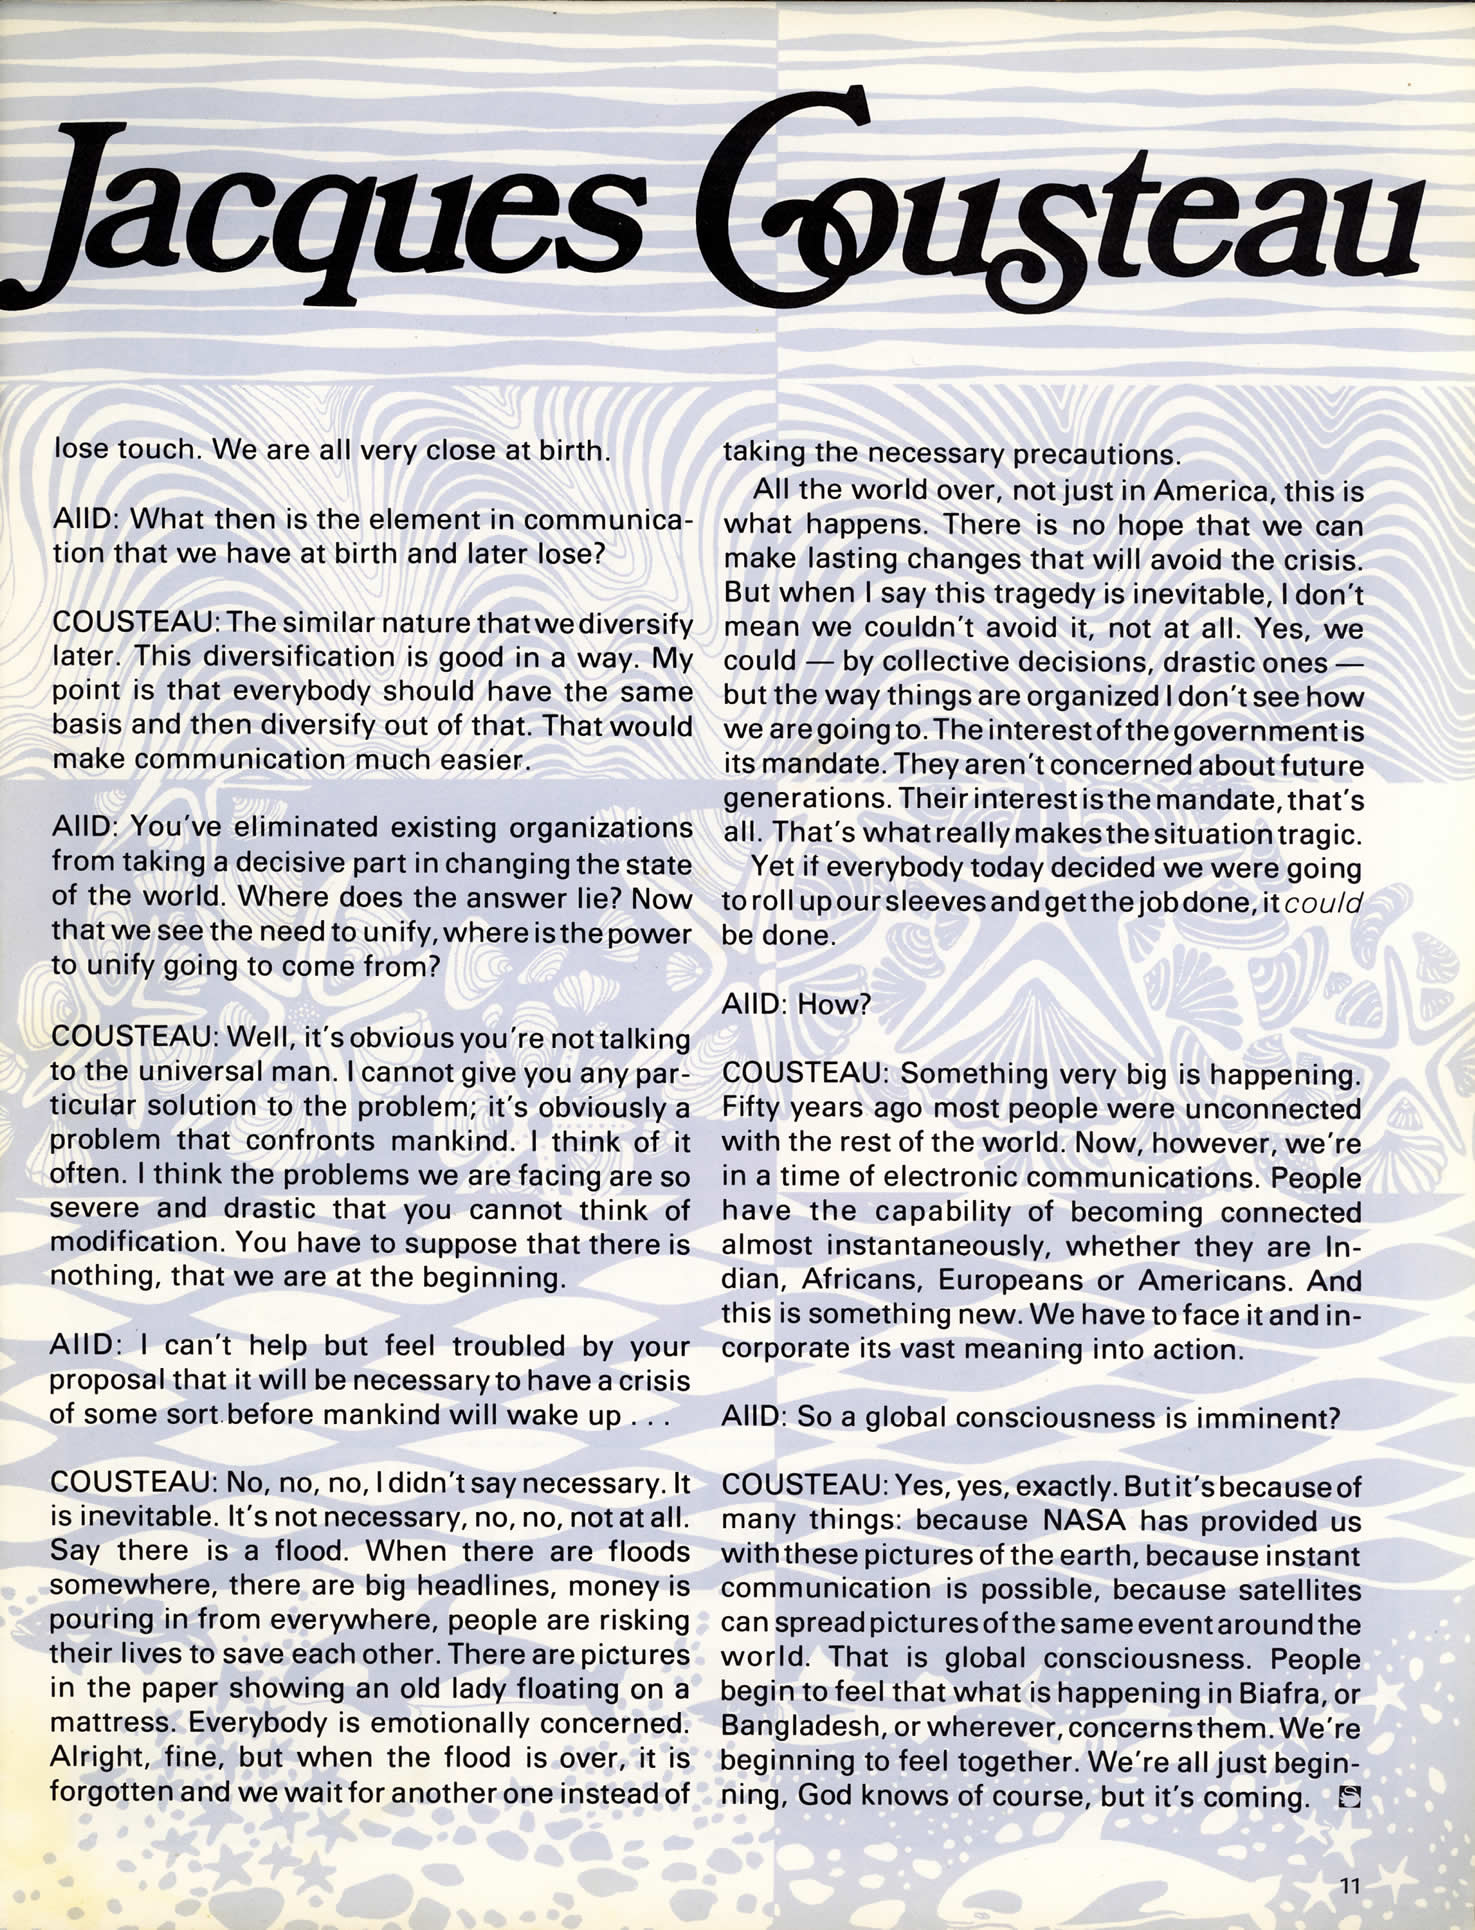 page11_interview_jacques_cousteau.jpg 482.5K